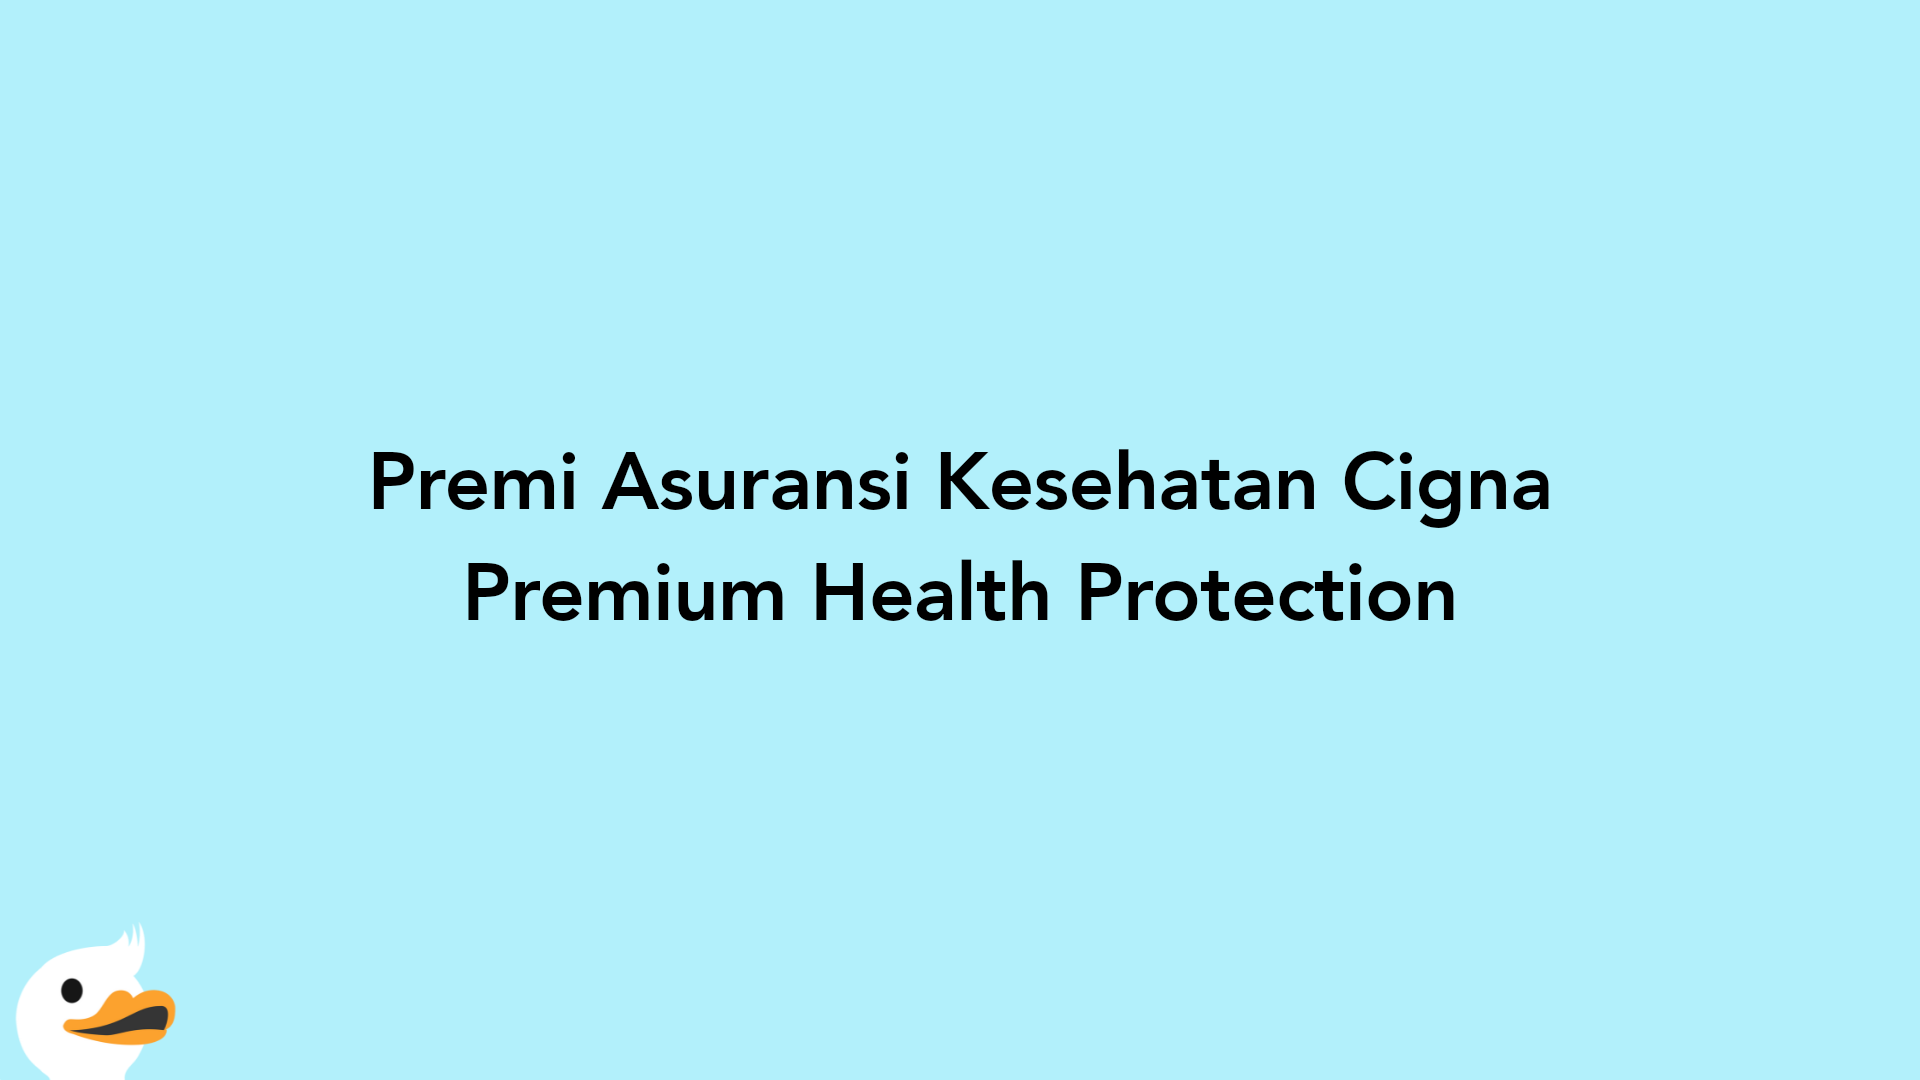 Premi Asuransi Kesehatan Cigna Premium Health Protection